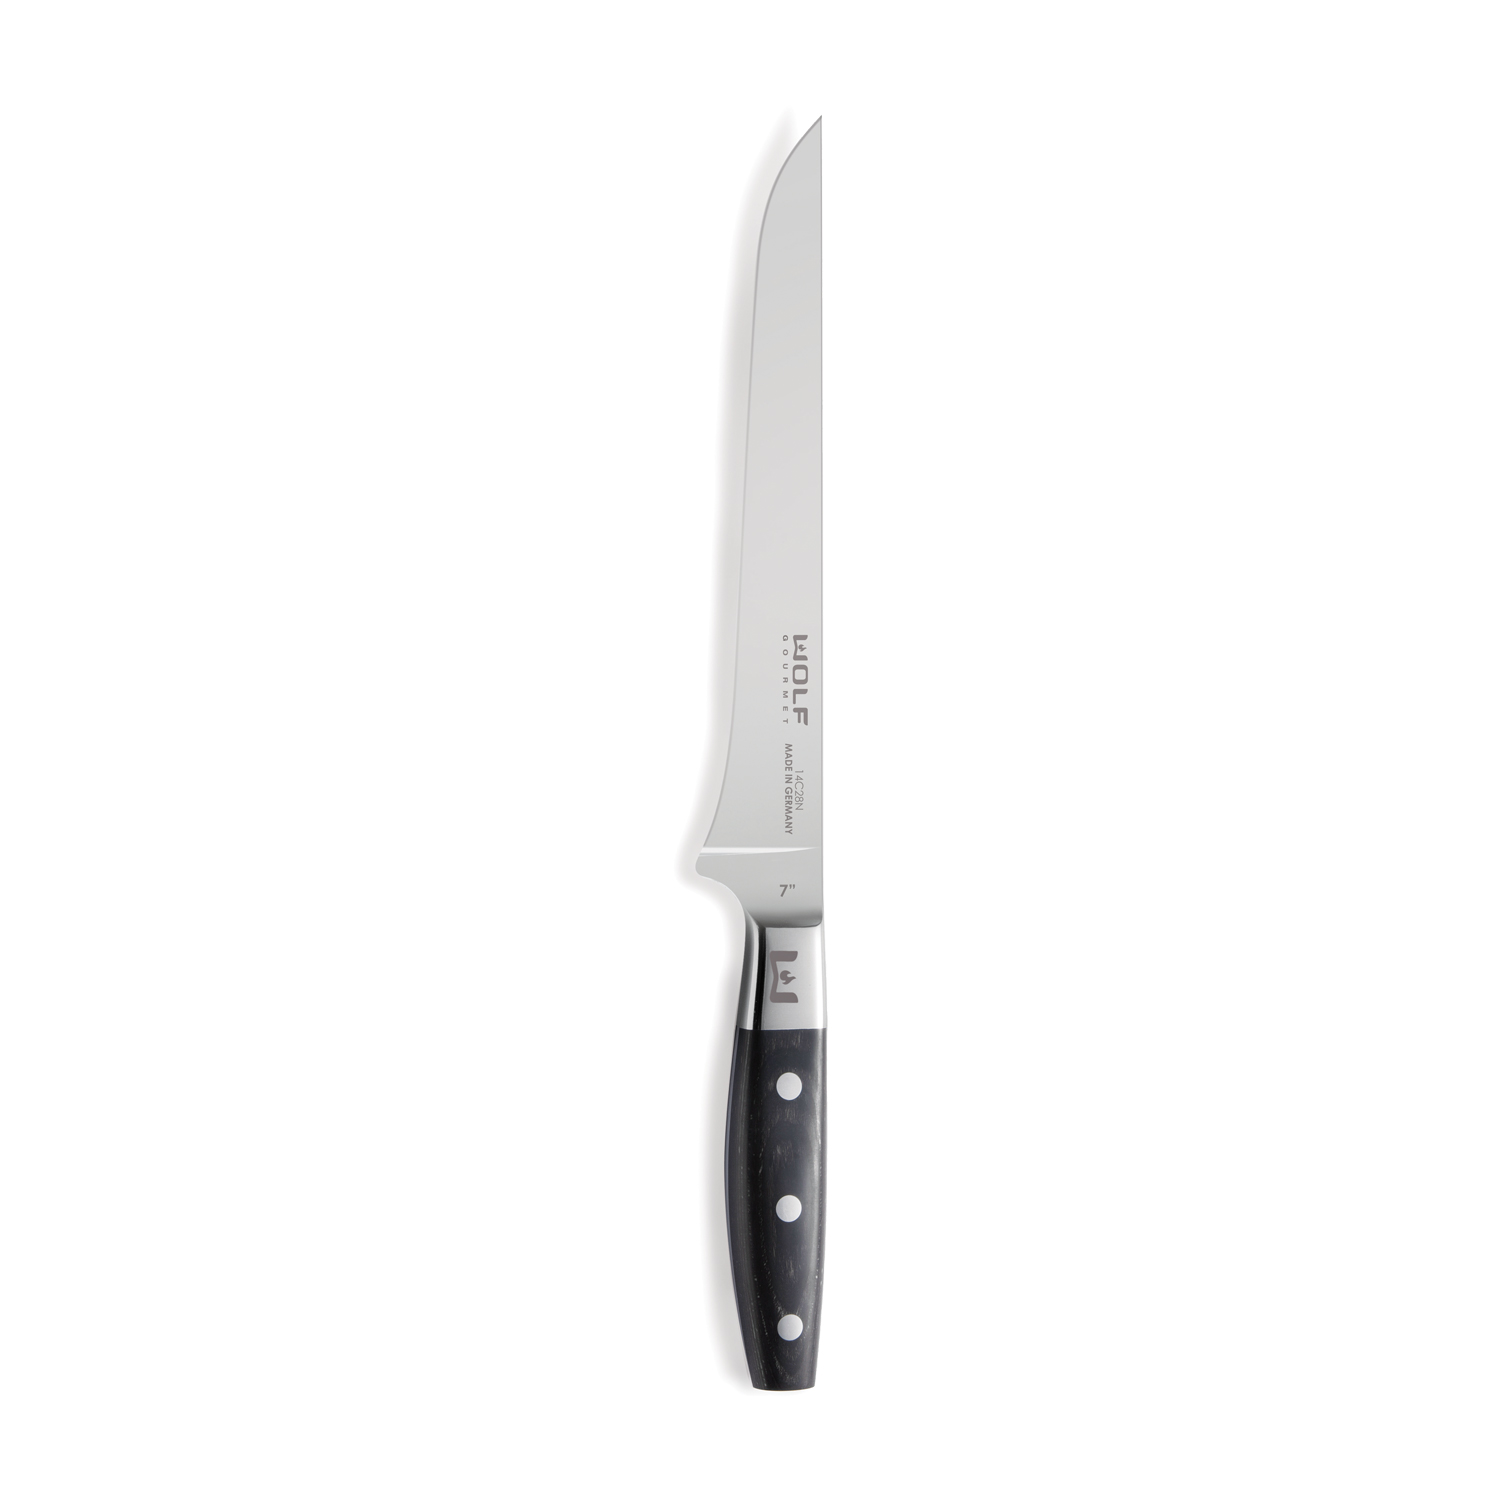 6 Boning Knife - The Fillet/Boning Knife Is Perfect for Delicate